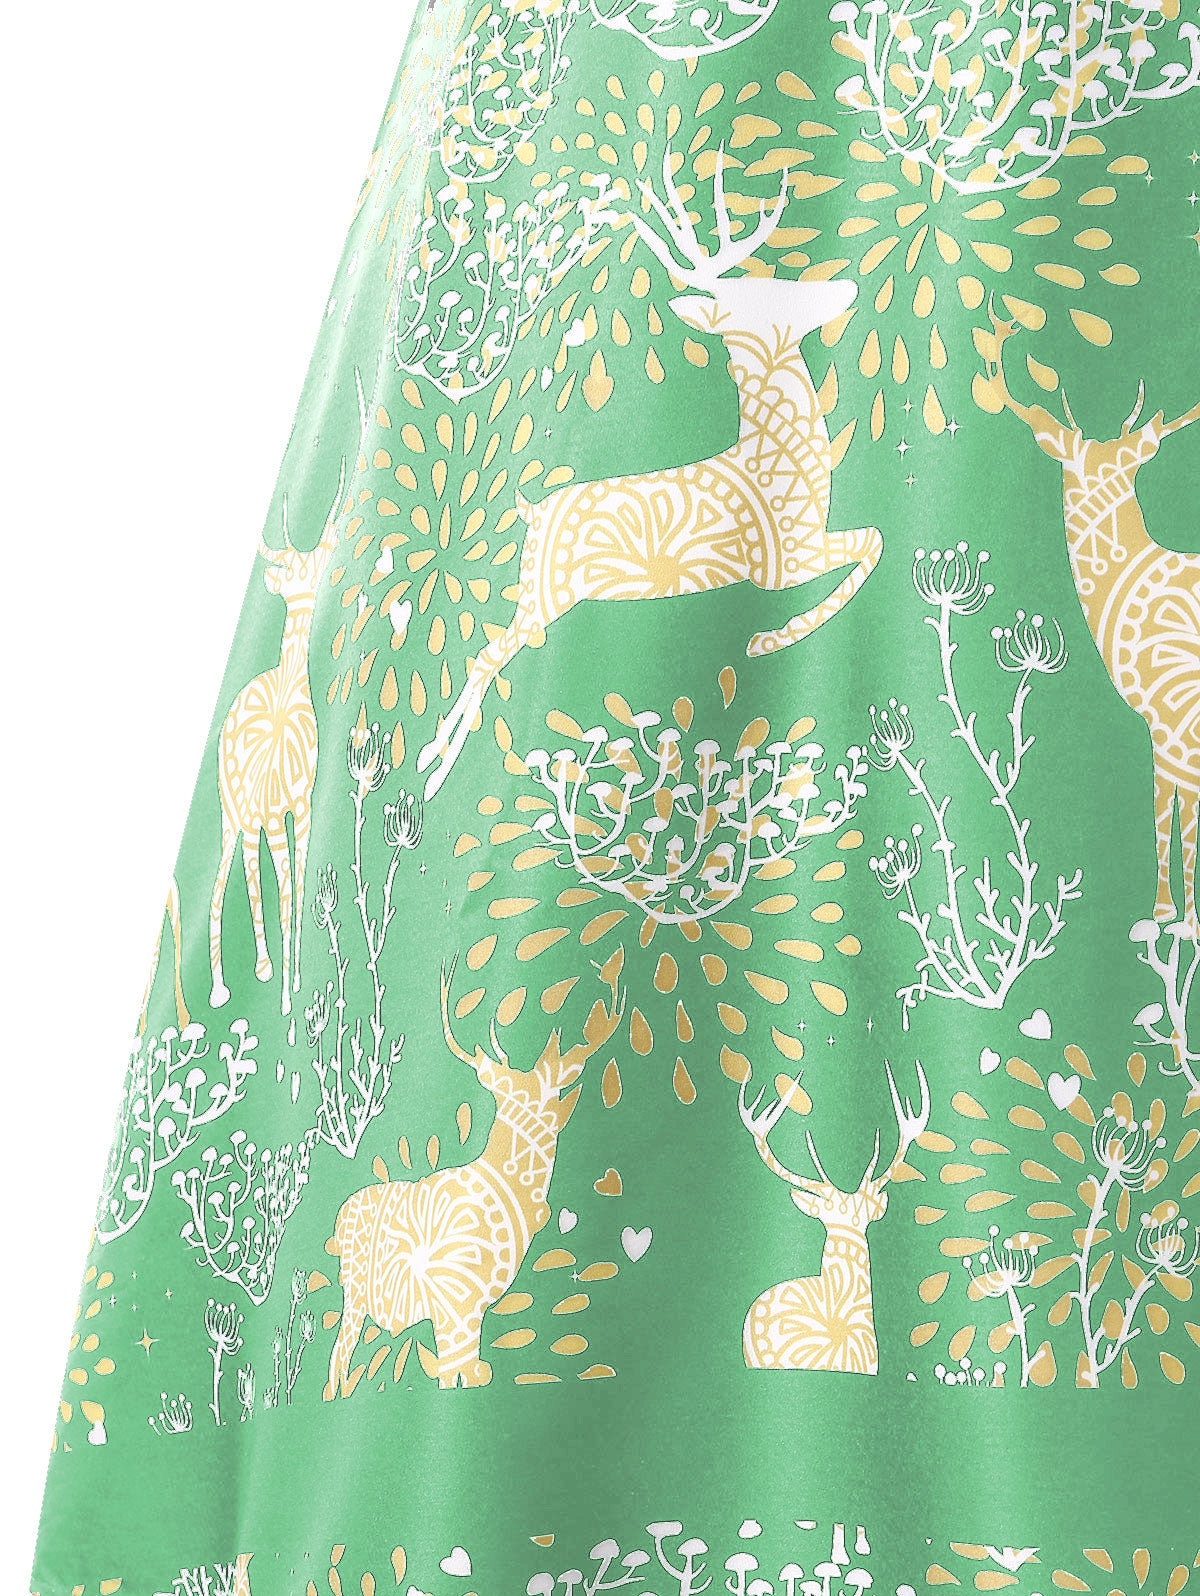 Vintage Christmas Elk Print Pin Up Dress